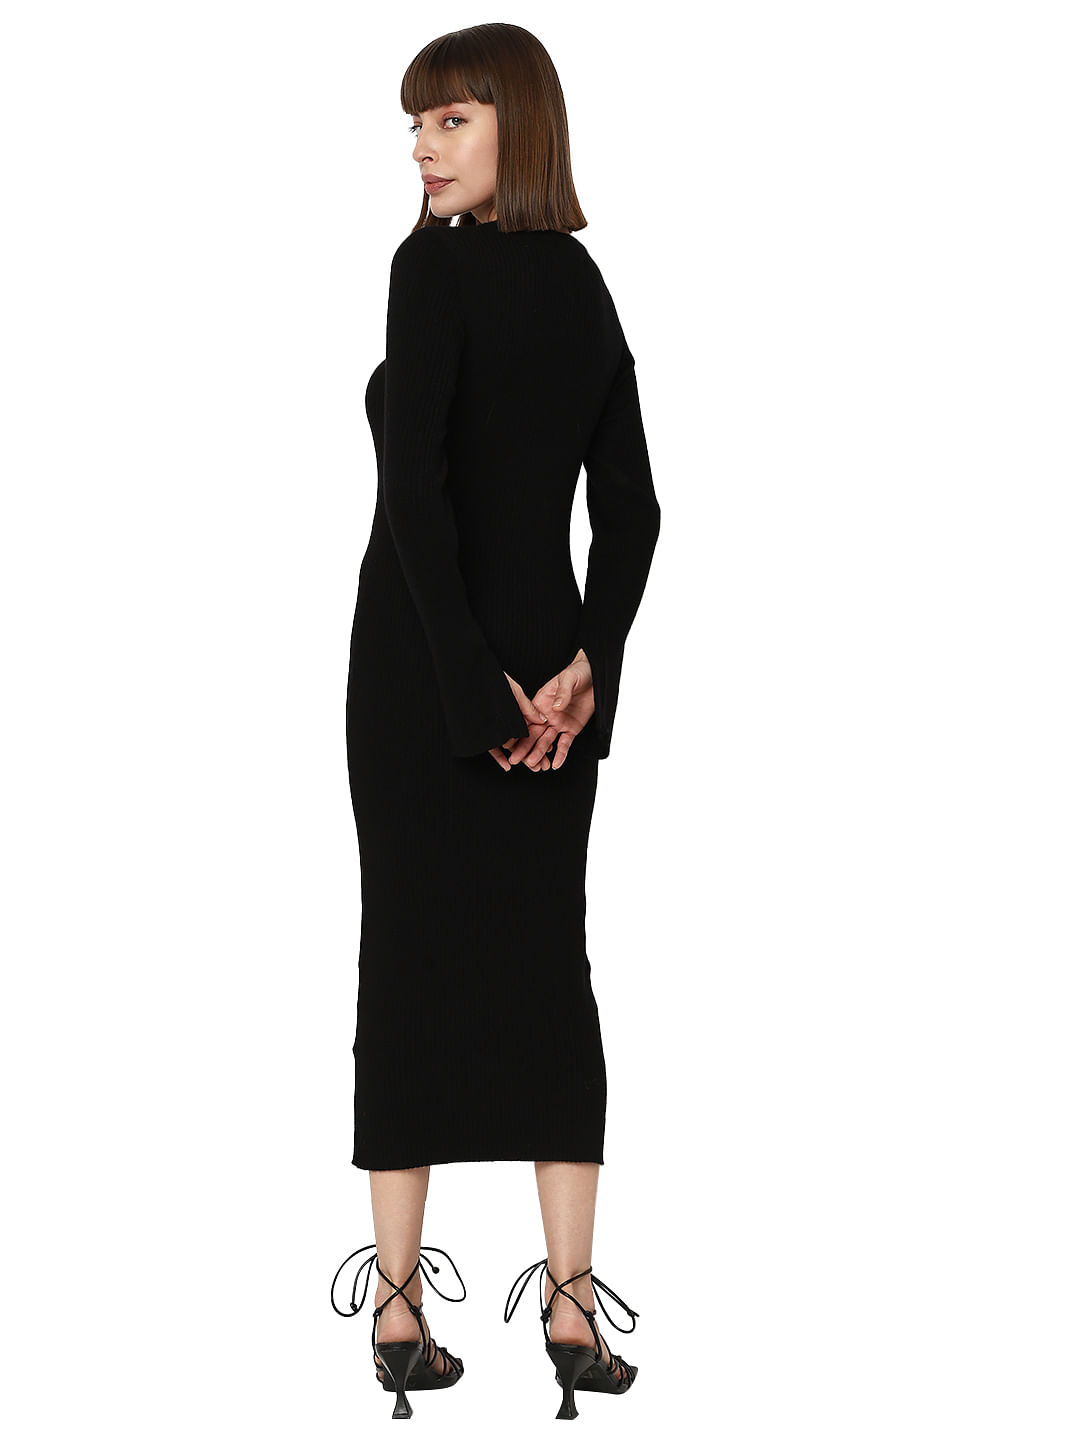 Vero Moda Dress Black Lace LBD Sz M | Lace dress black, Black dress, Lace  lbd